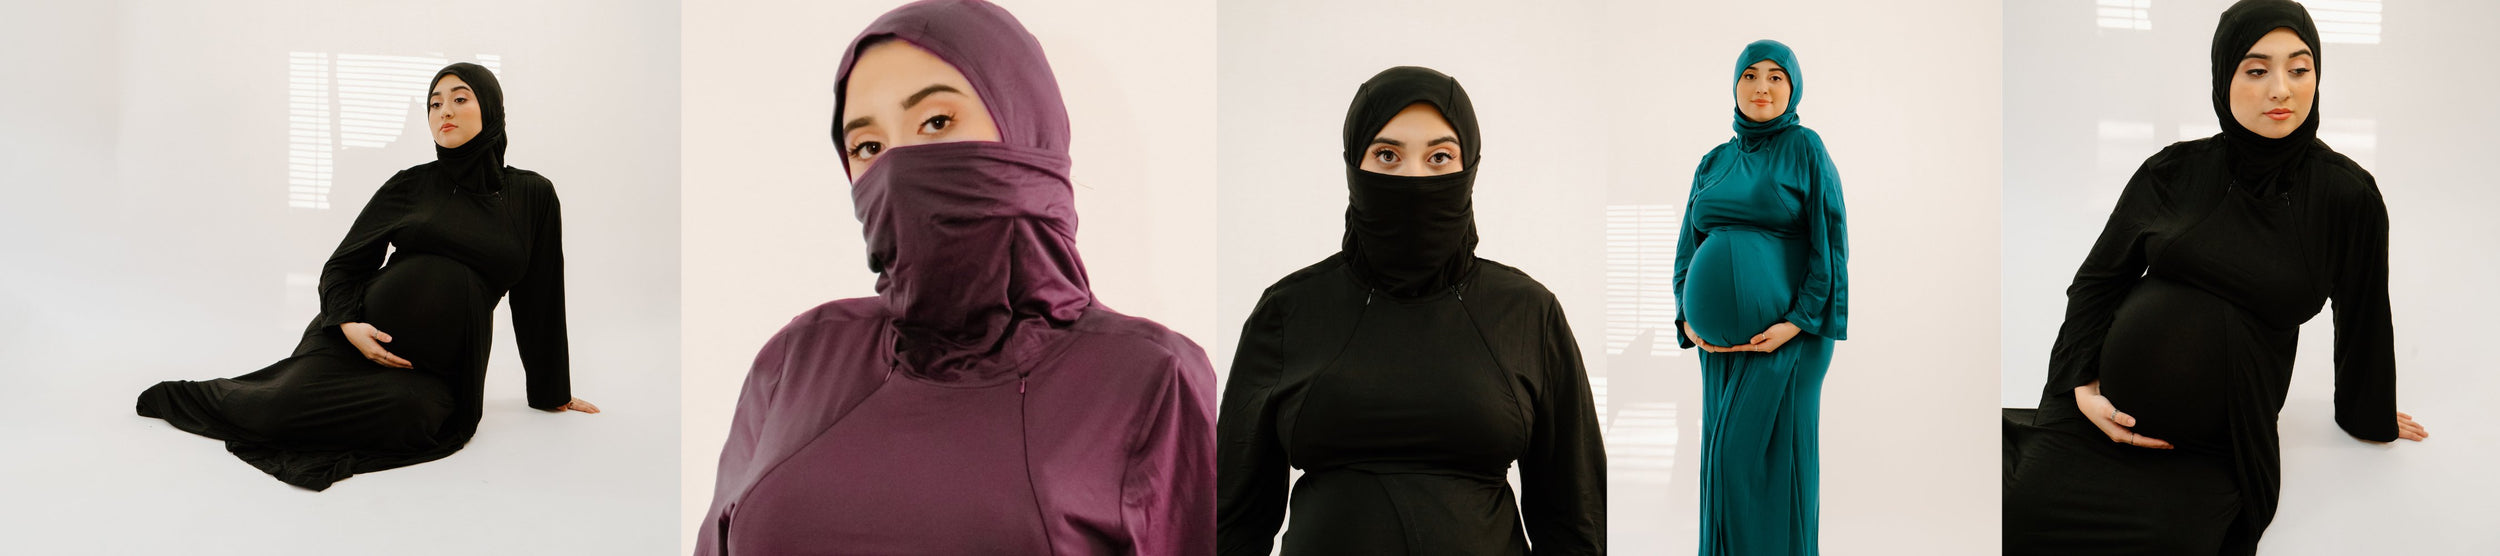 Nadia + Hijabs